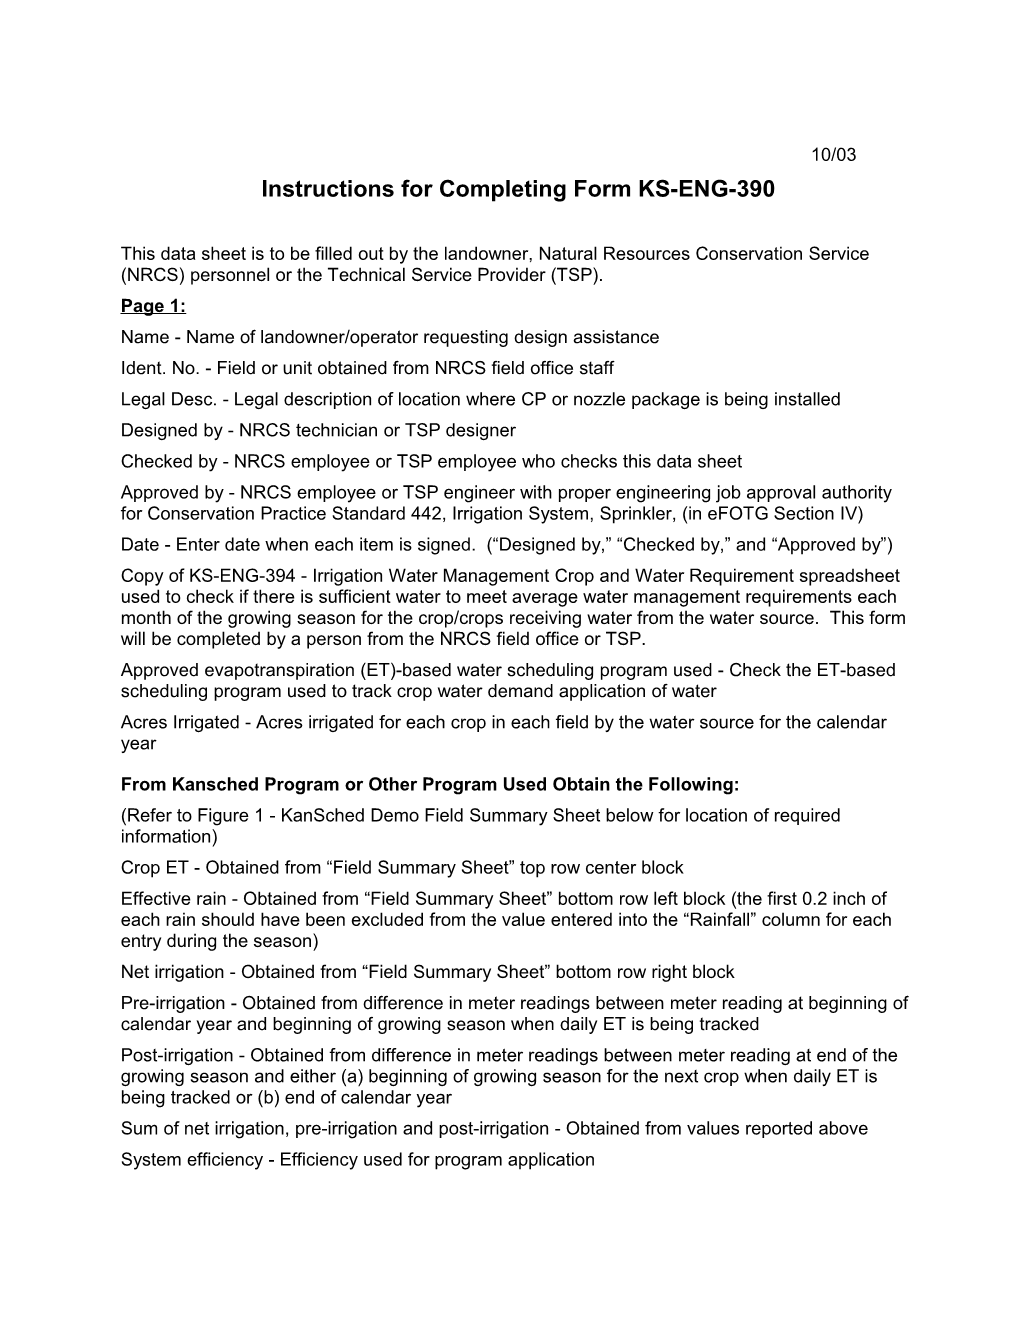 Instructions for Completing Form KS-ENG-390